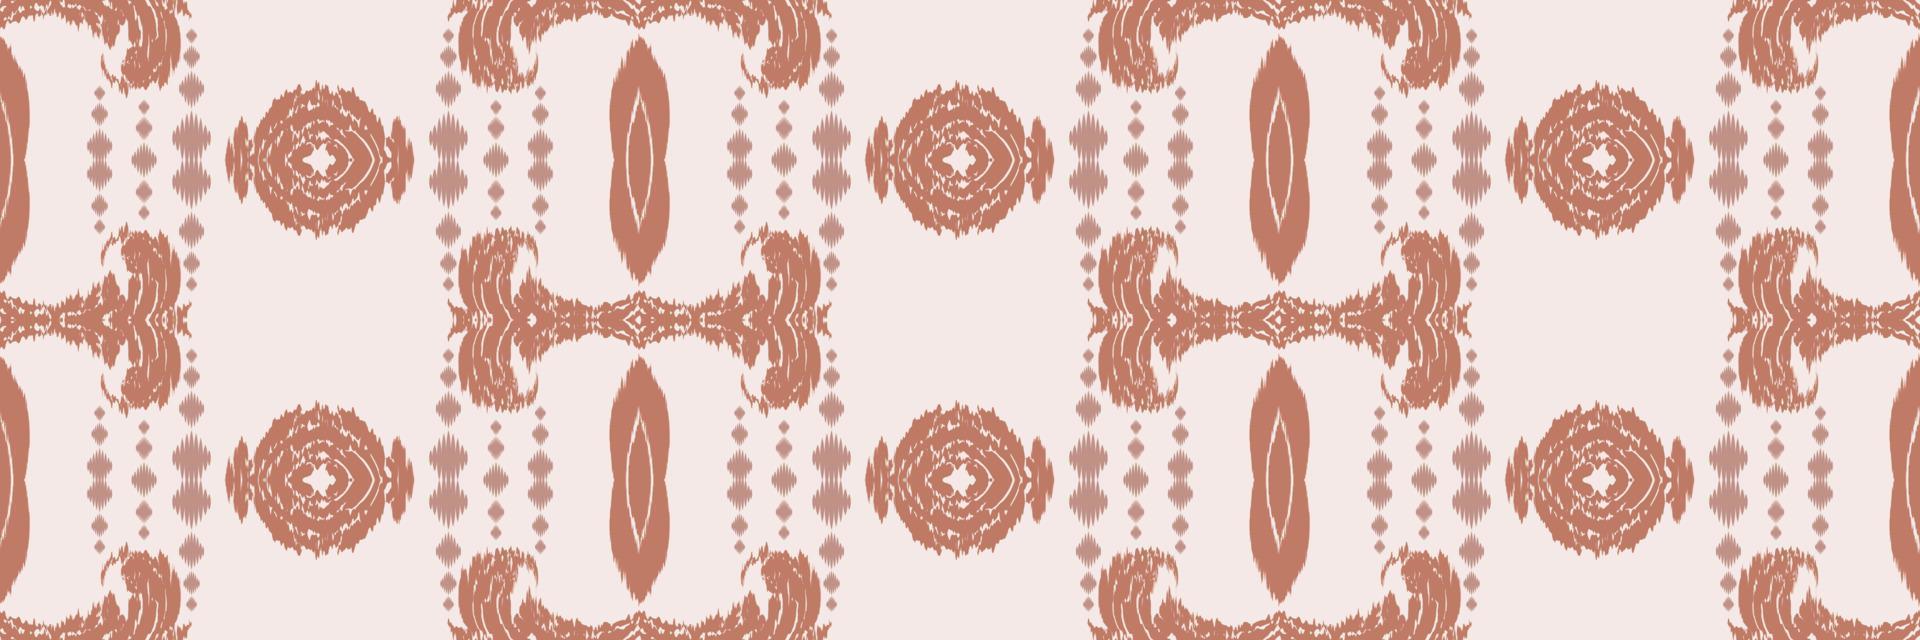 motivo textil batik tela ikat patrón sin costuras diseño vectorial digital para imprimir saree kurti borde de tela símbolos de pincel muestras elegantes vector